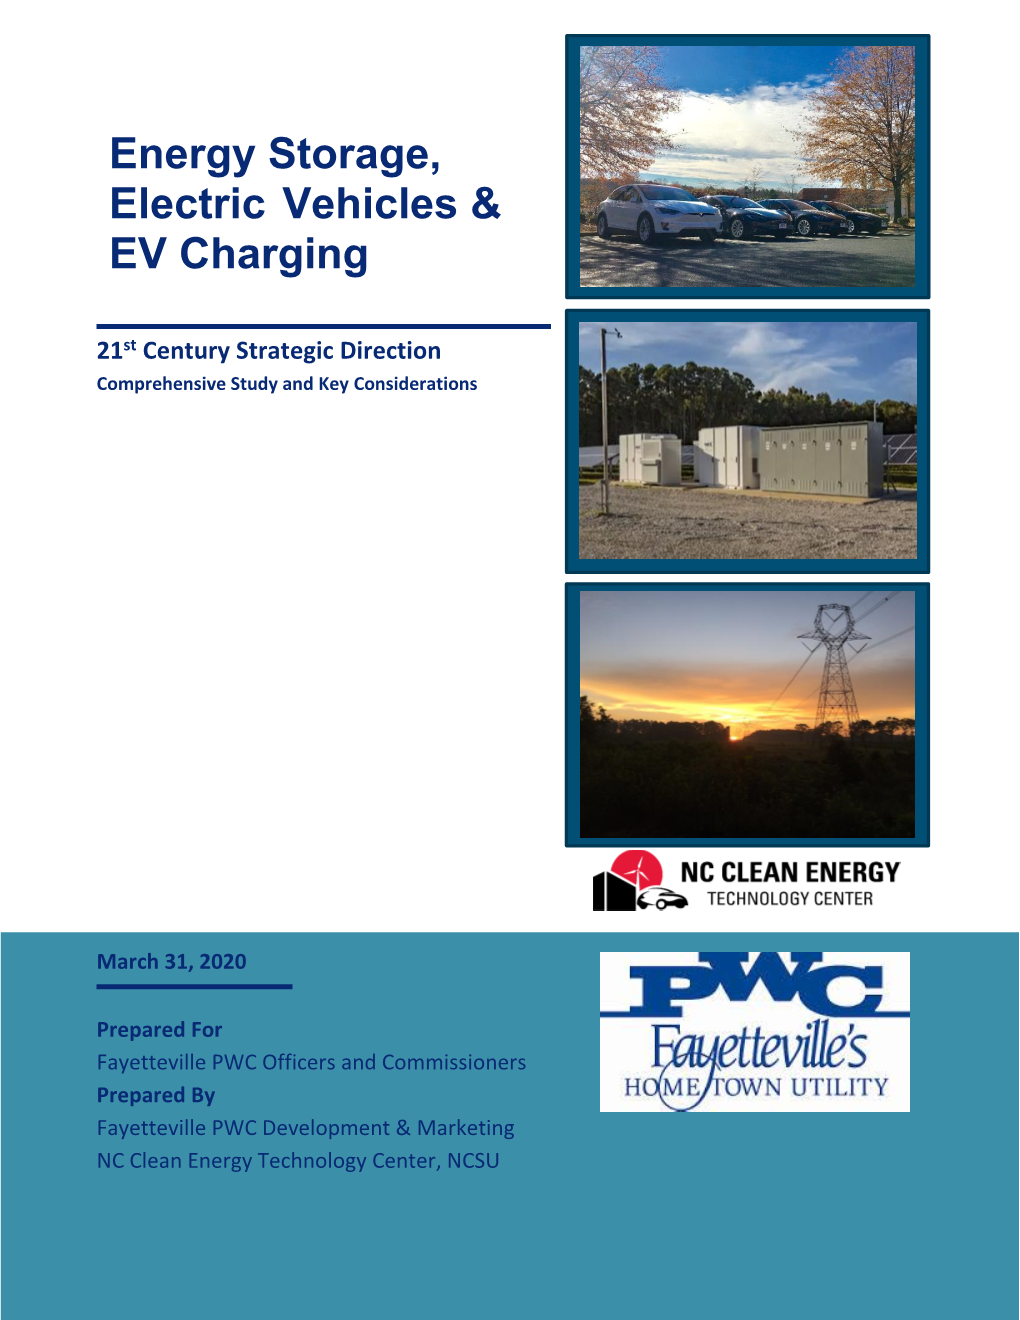 Energy Storage, Electric Vehicles & EV Charging